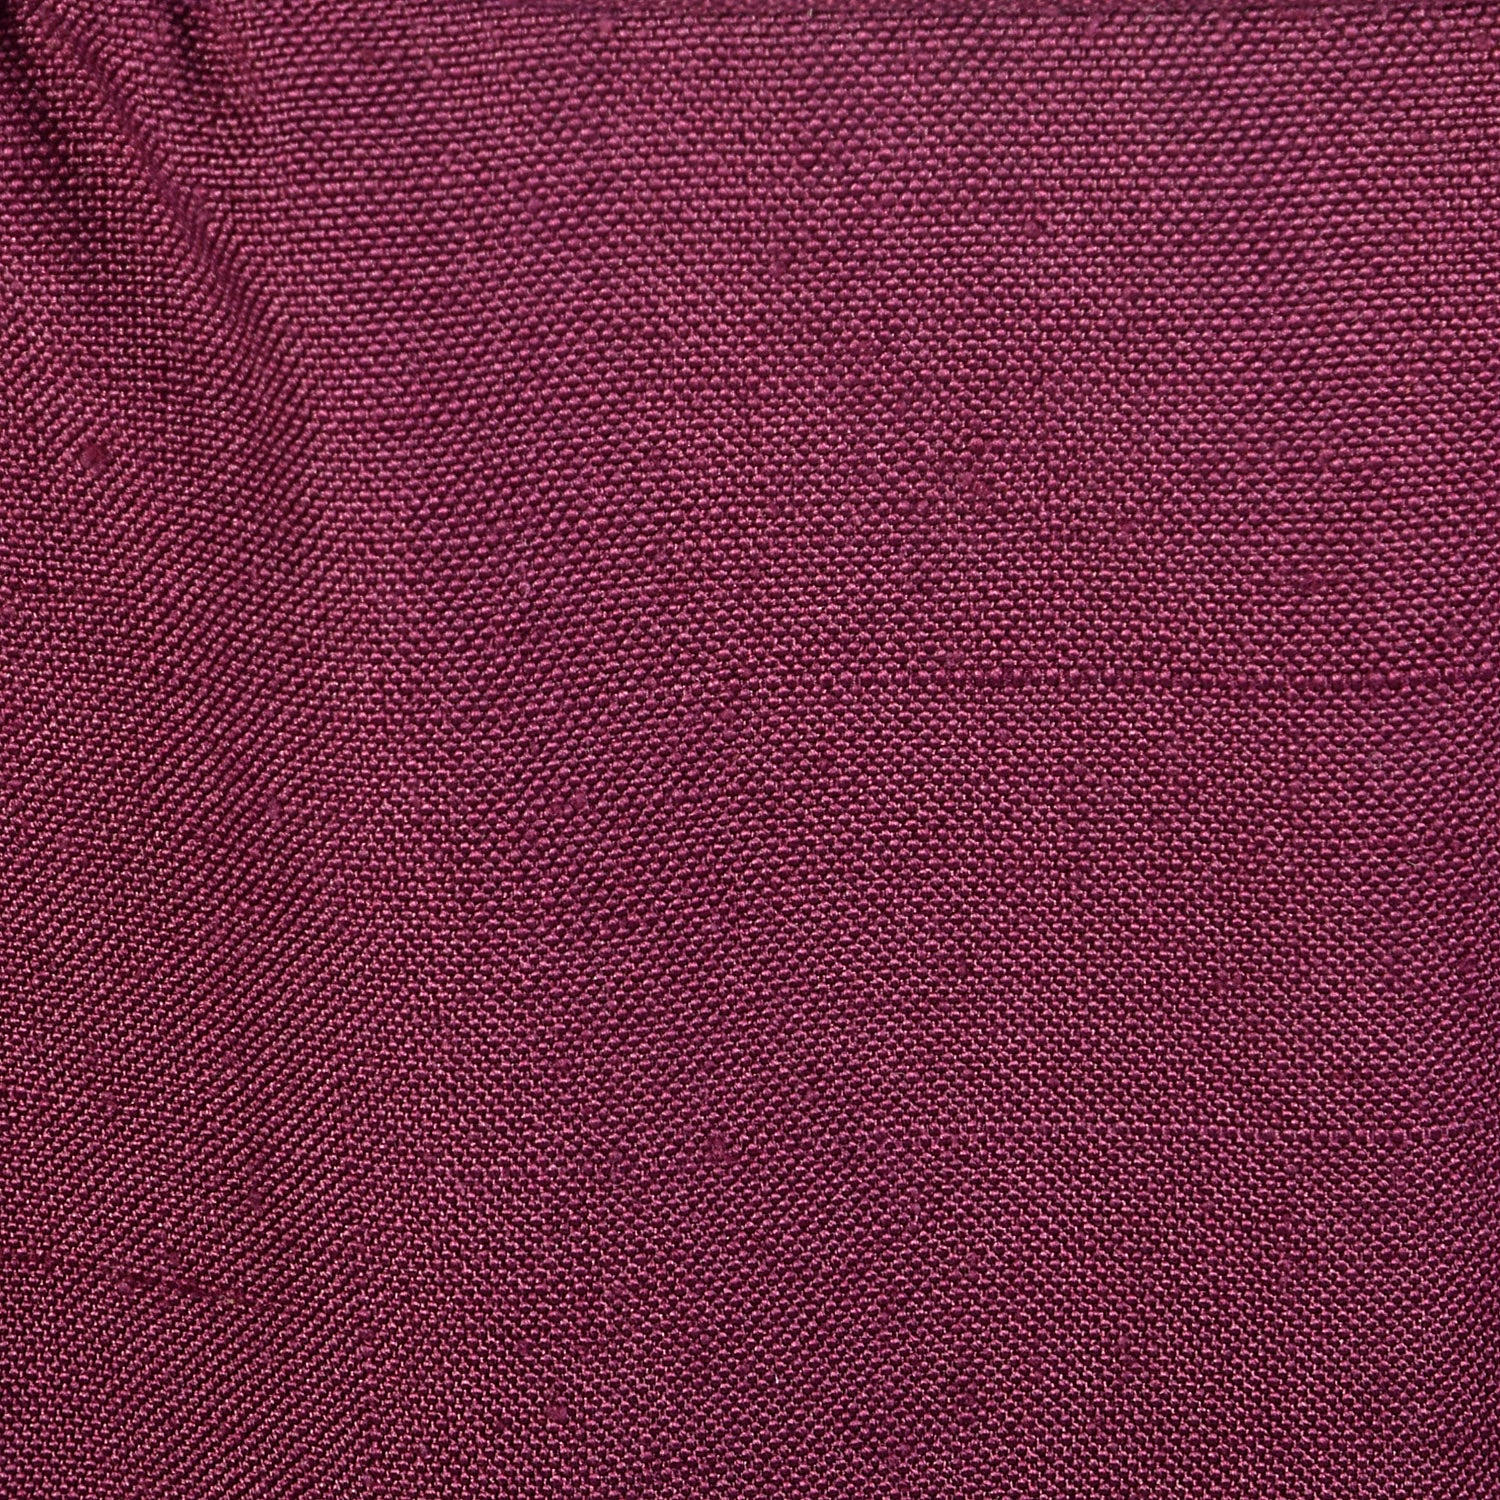 Small 1970s Donald Brooks Purple Skirt